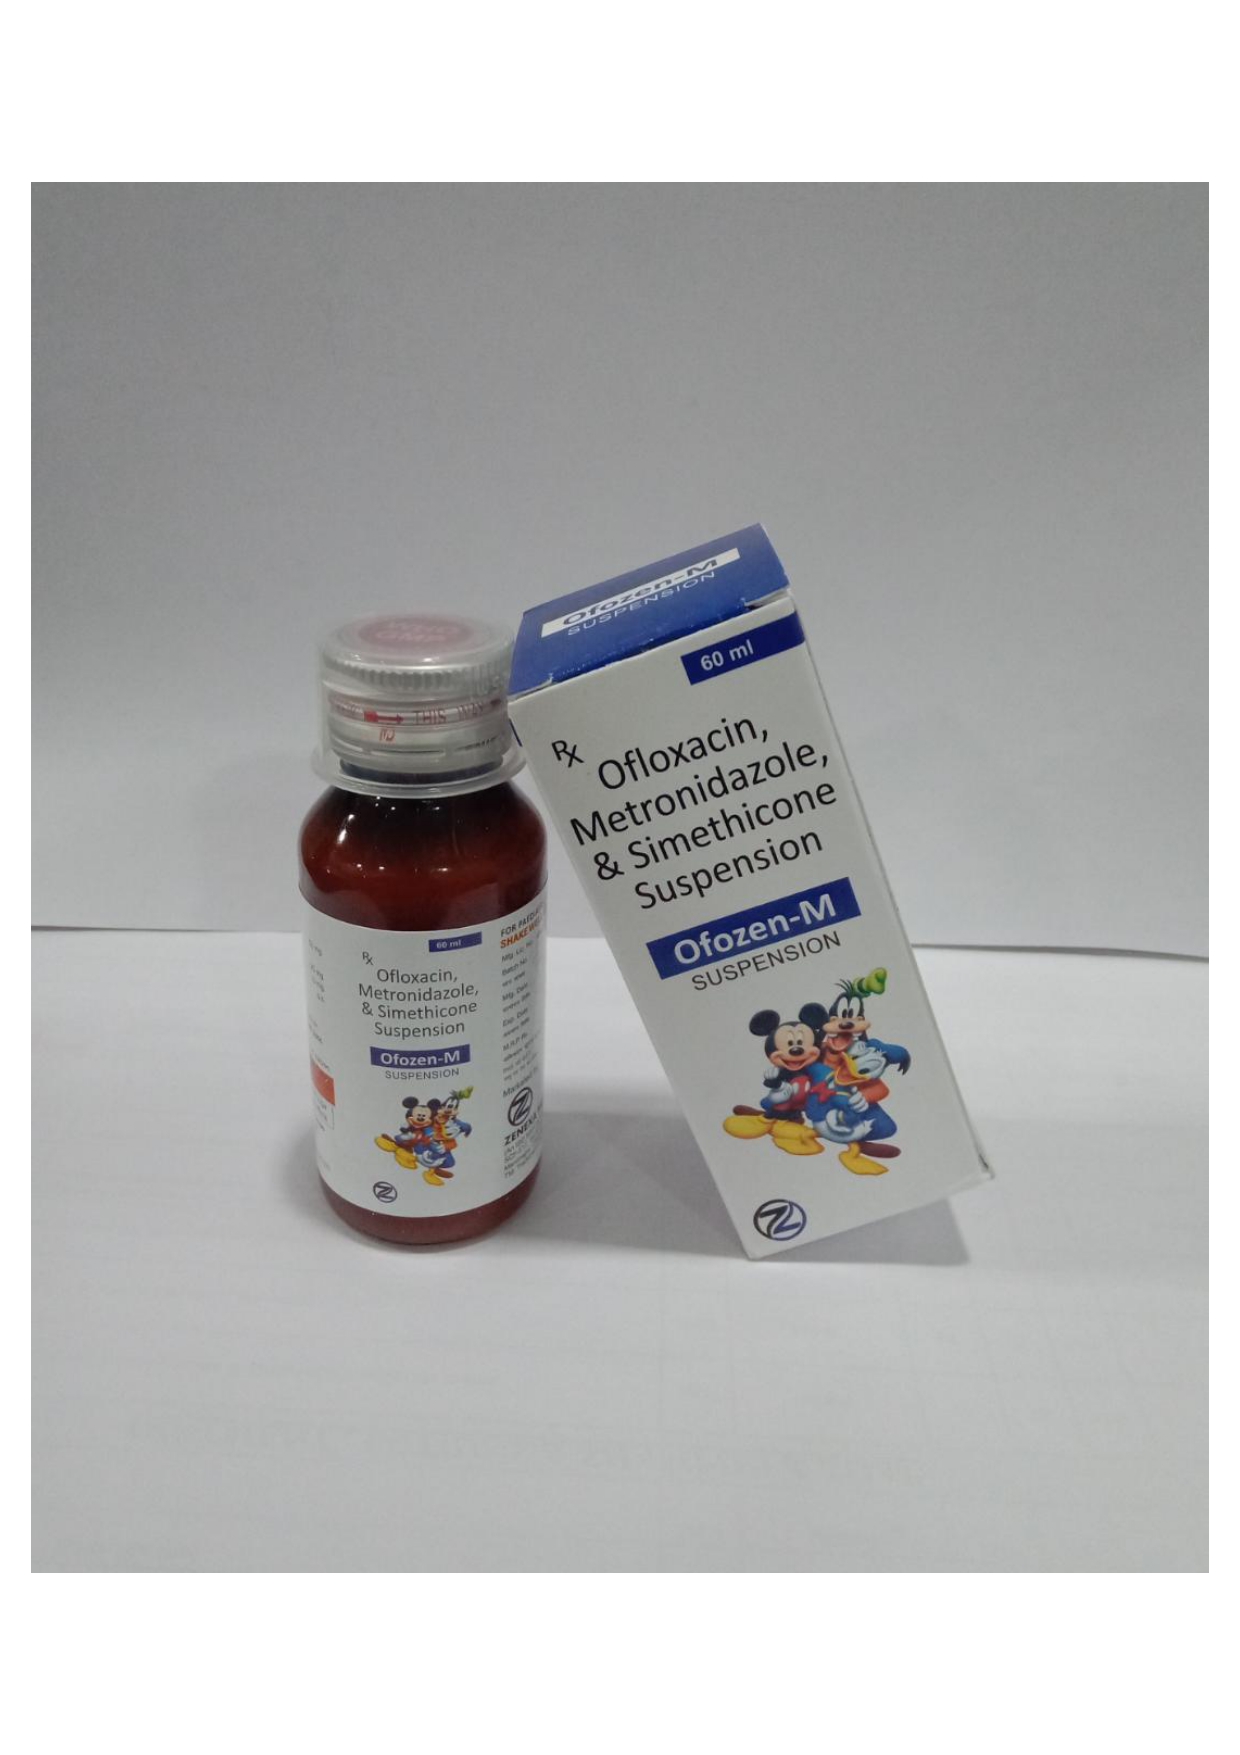 ofloxacin 50mg + metronidazole 120mg + simethicone 10mg
suspension